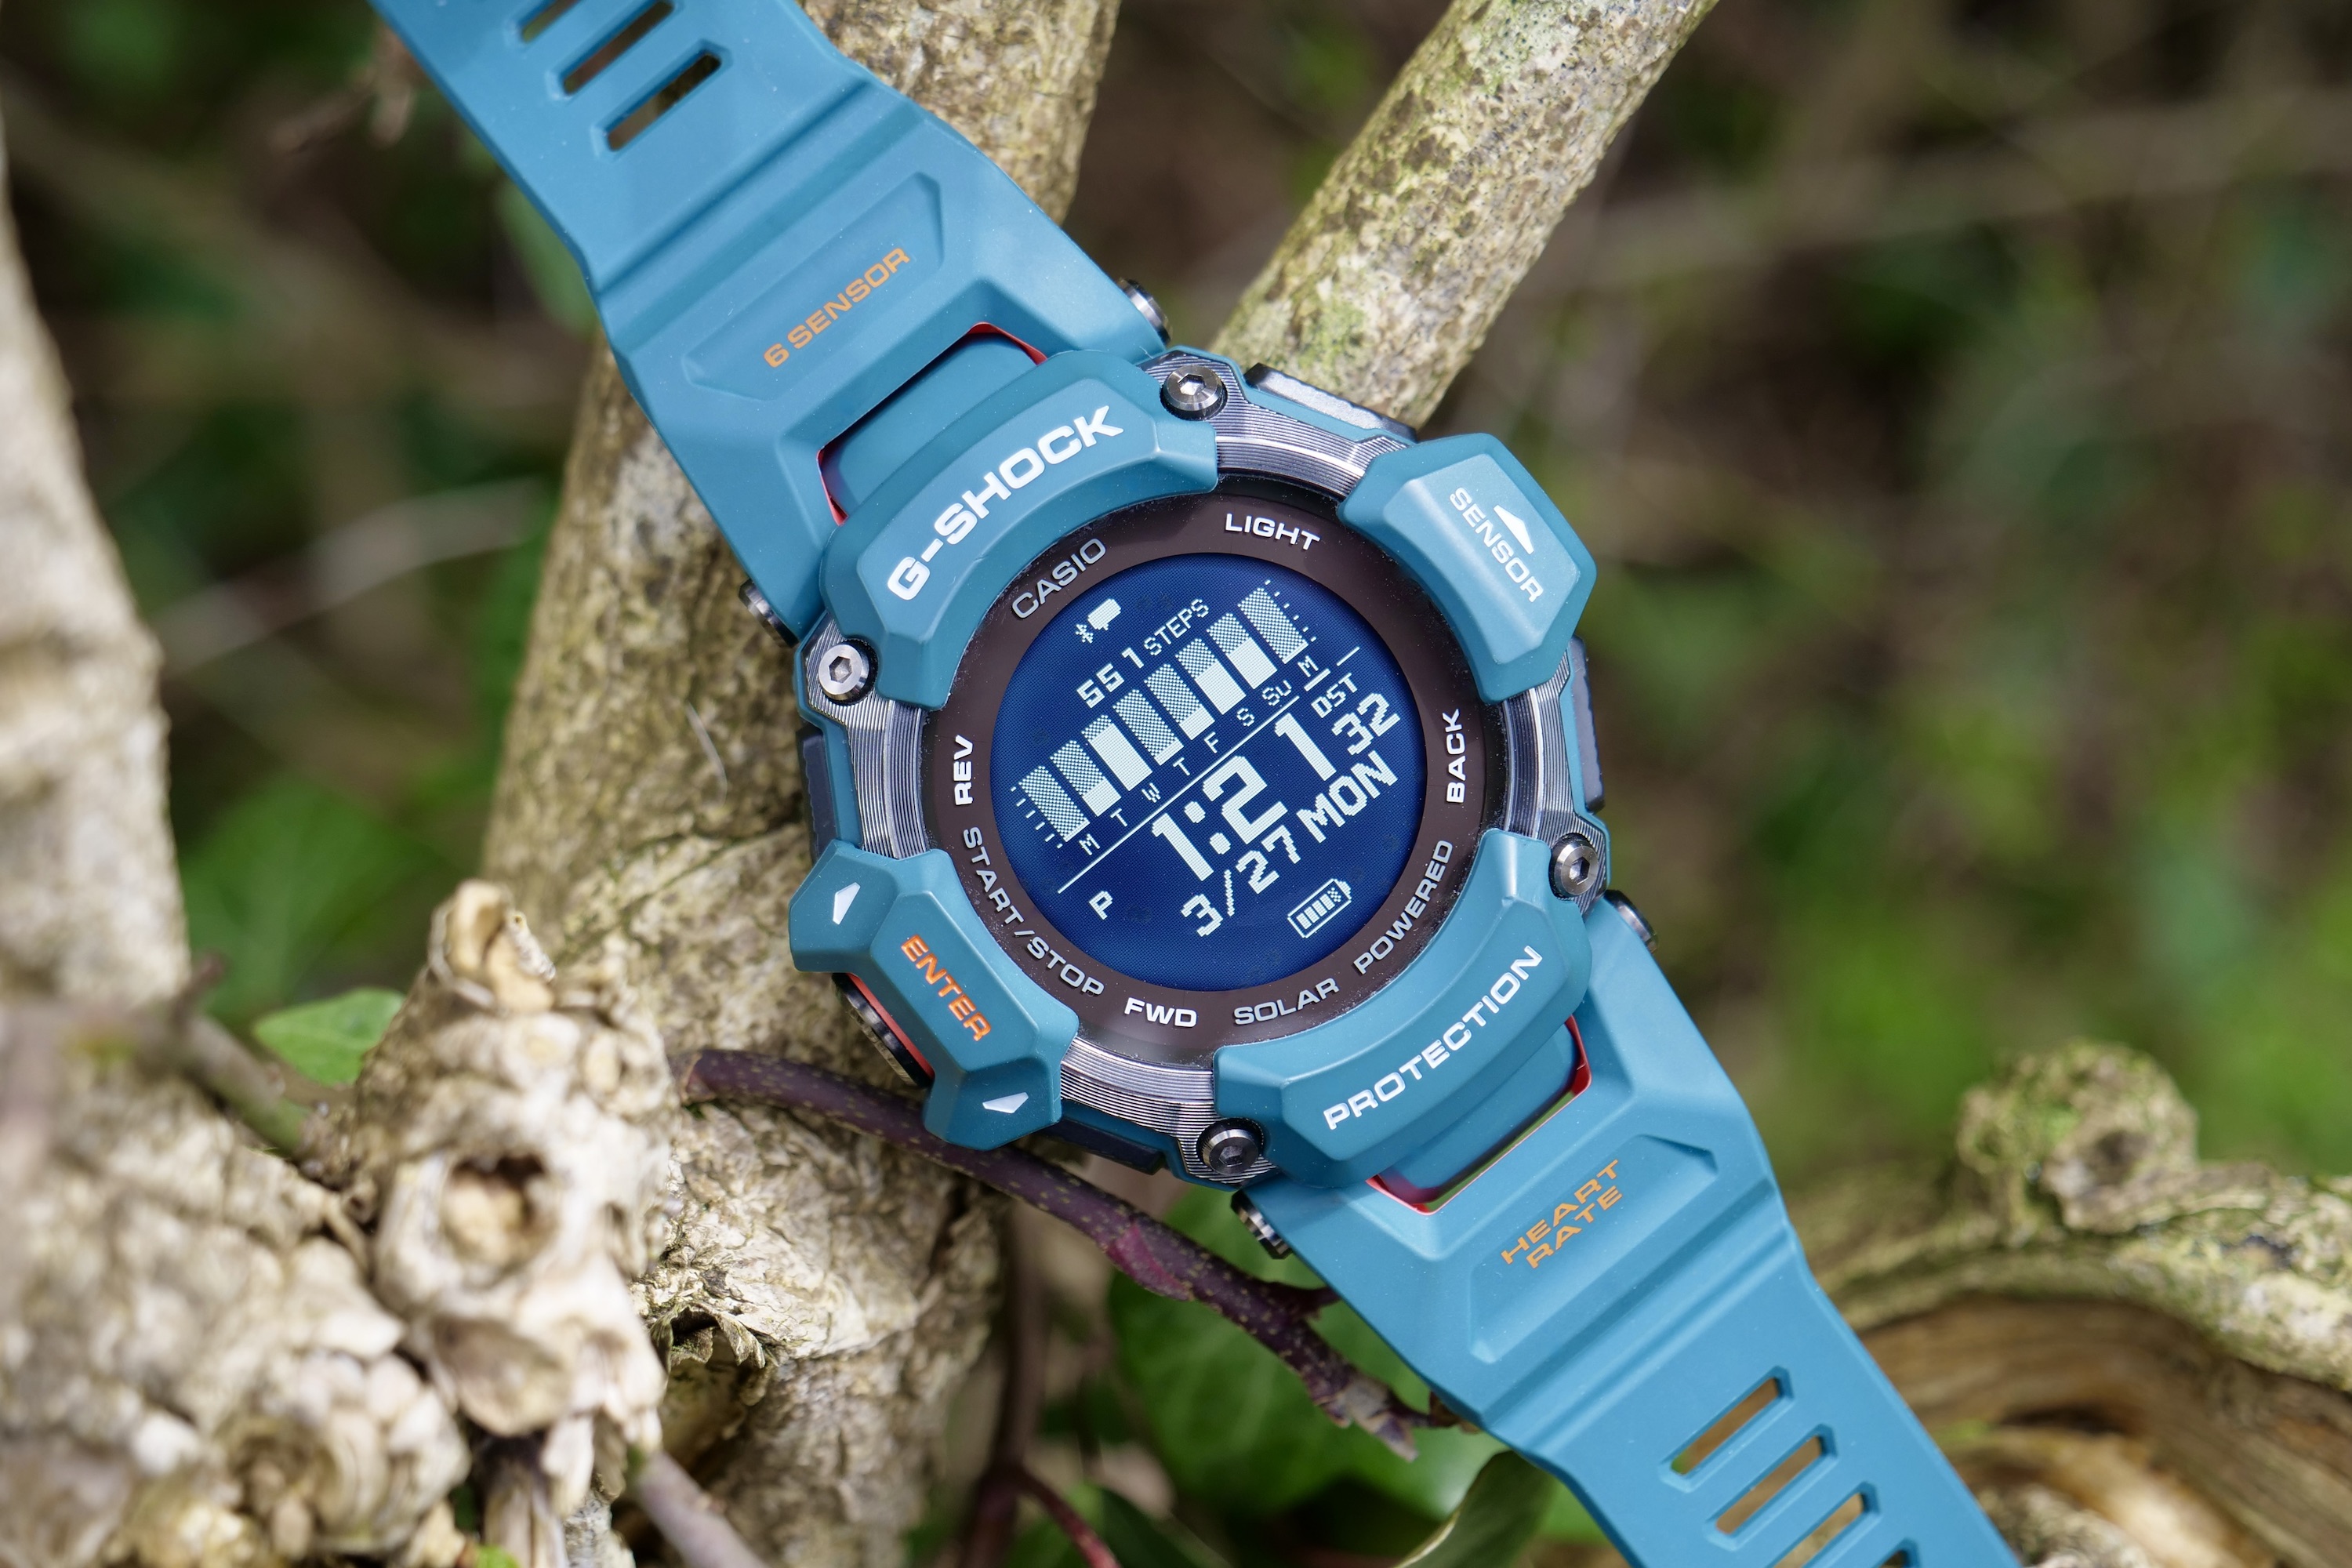 G-Shock GBD-H2000 review: the everlasting hybrid smartwatch